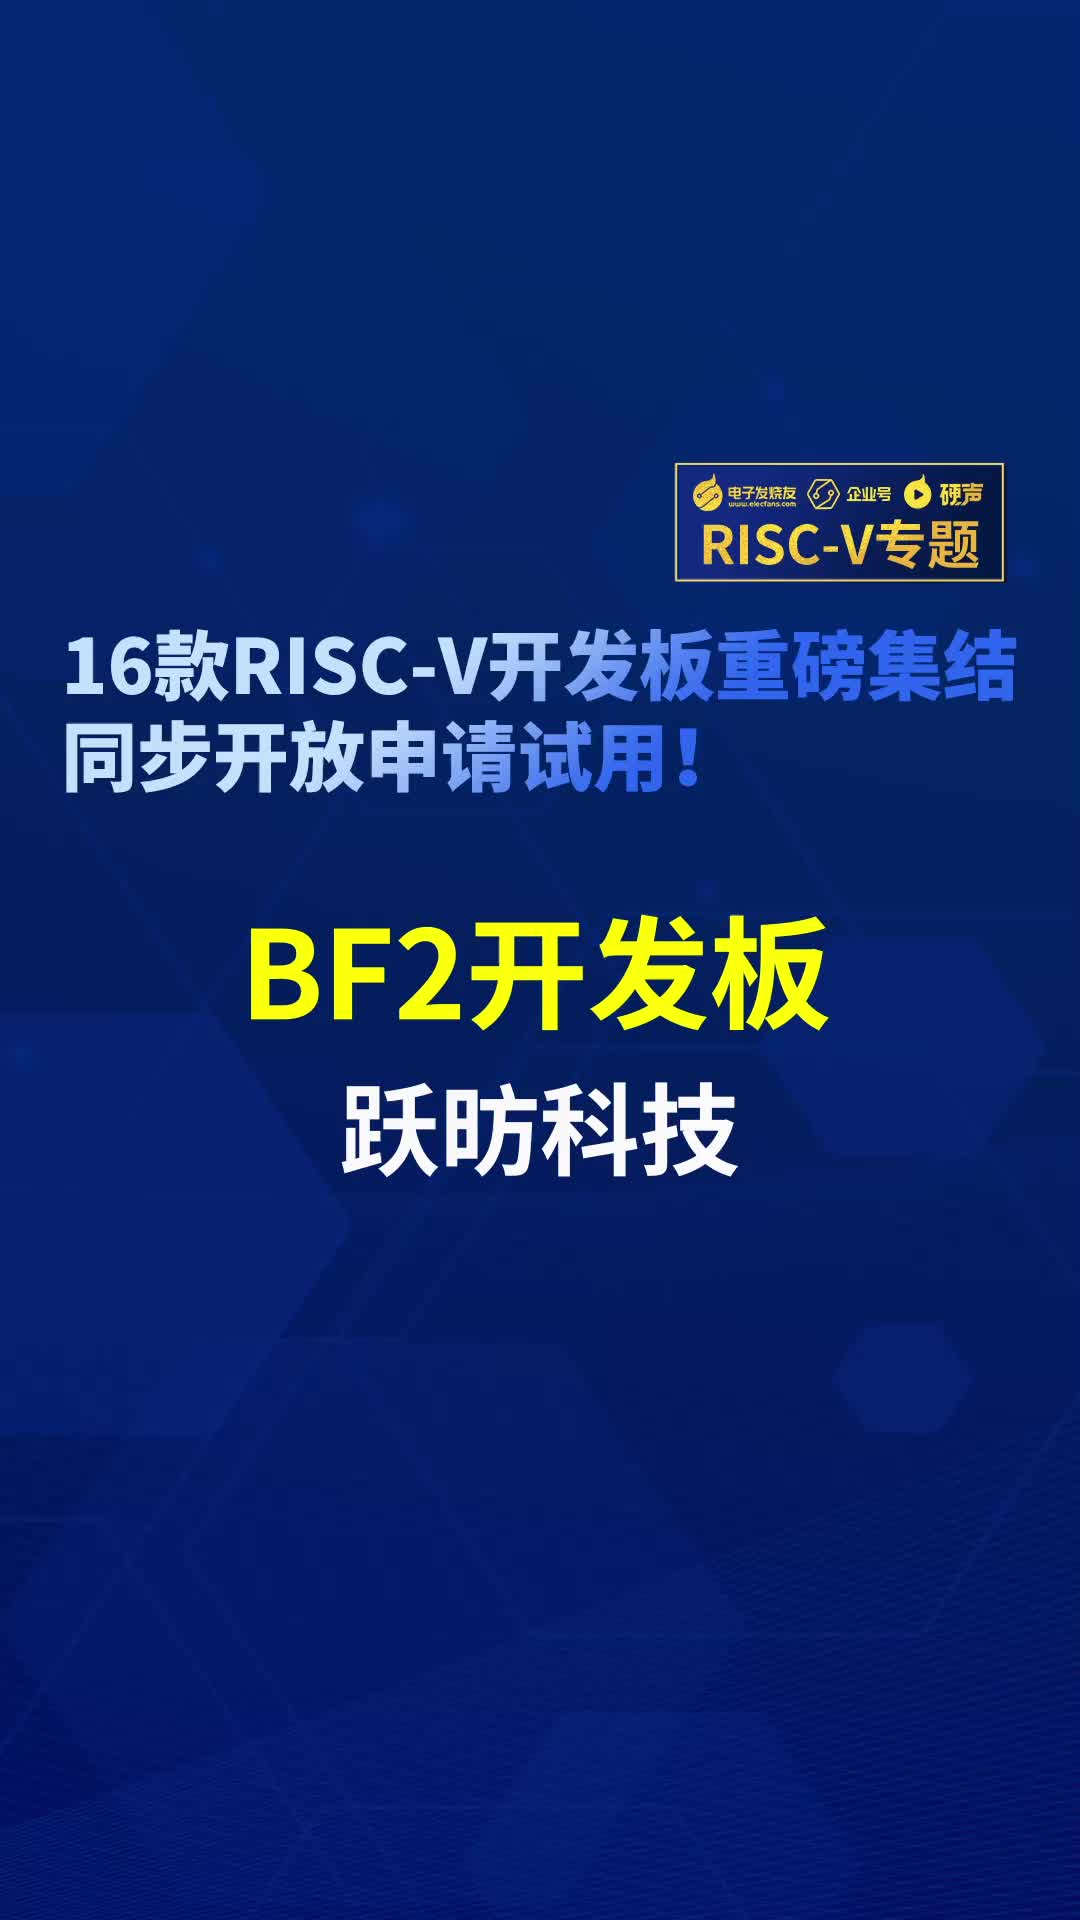 【RISC-V專題】躍昉科技BF2開發板首發試用#RISC-V開發板評測 